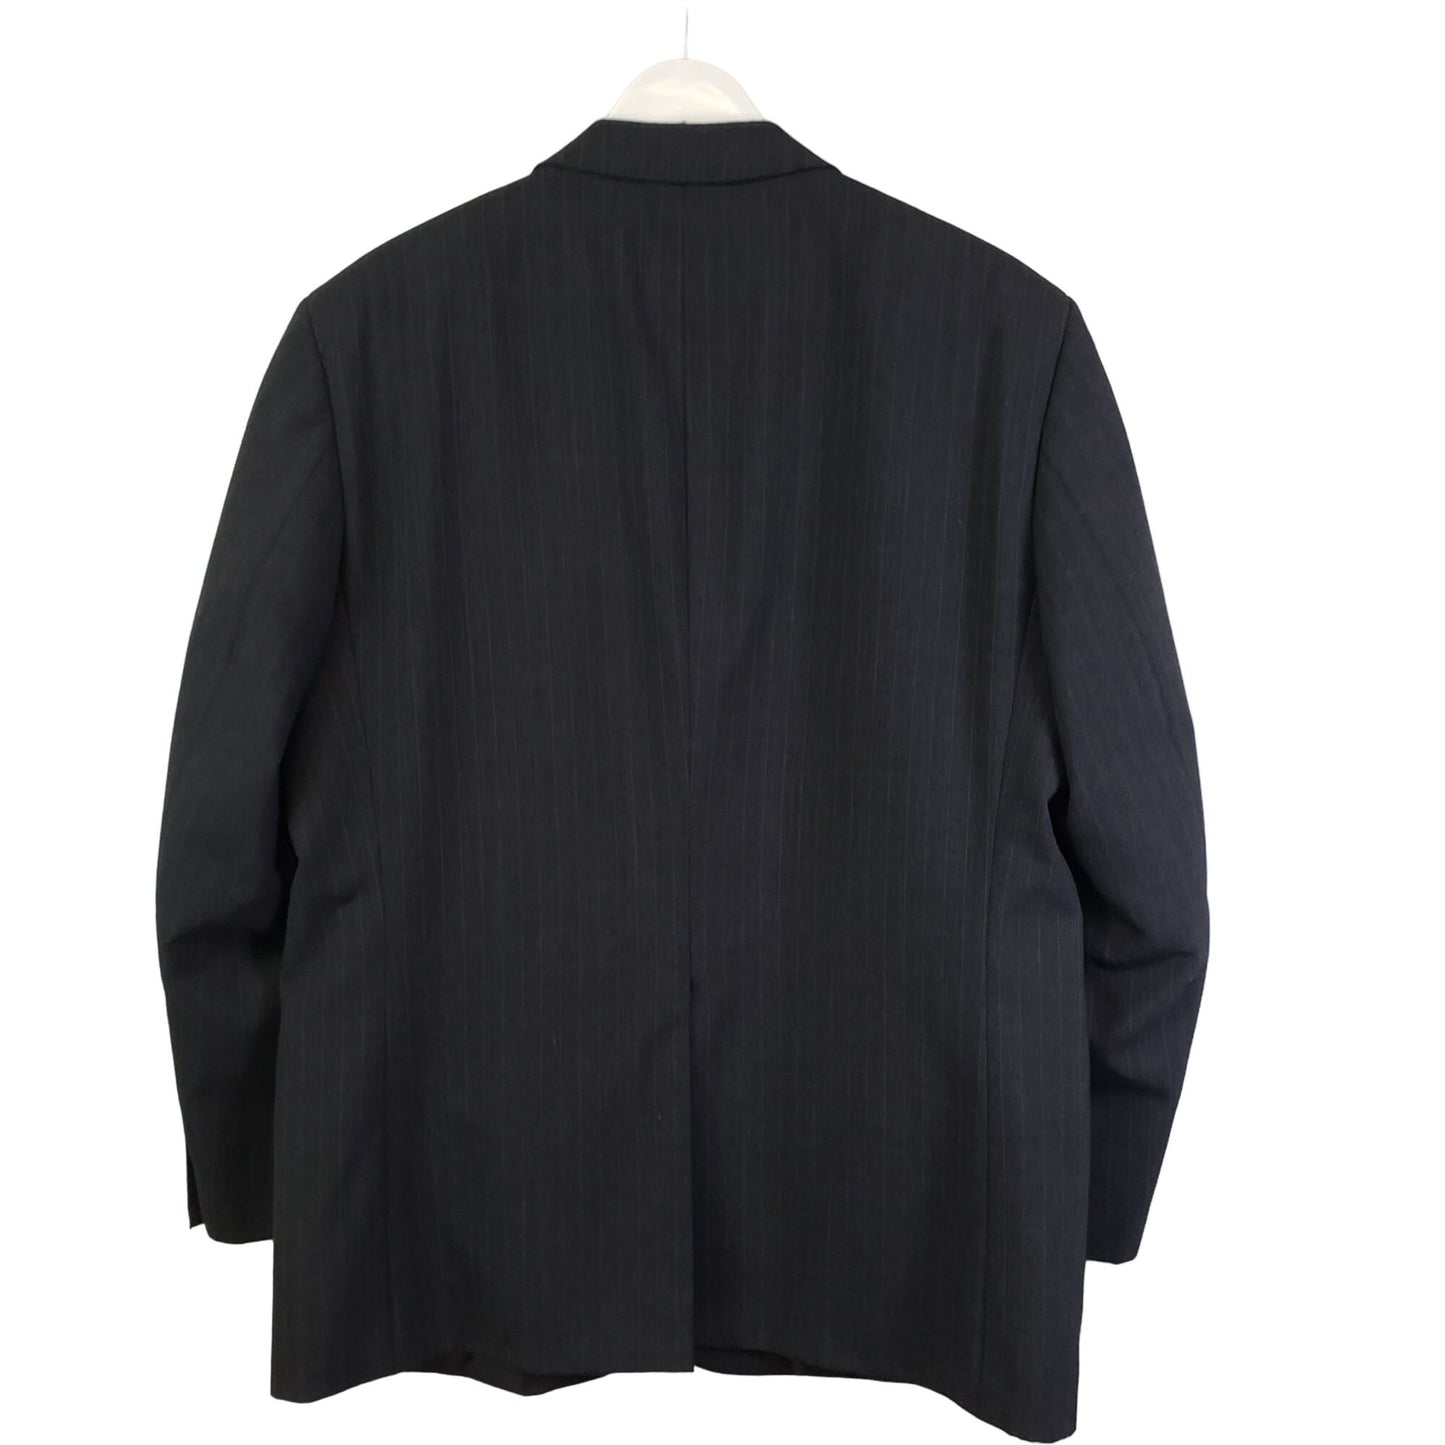 Statements Wool Blend 2 Button Pinstripe Suit Jacket Size 44R